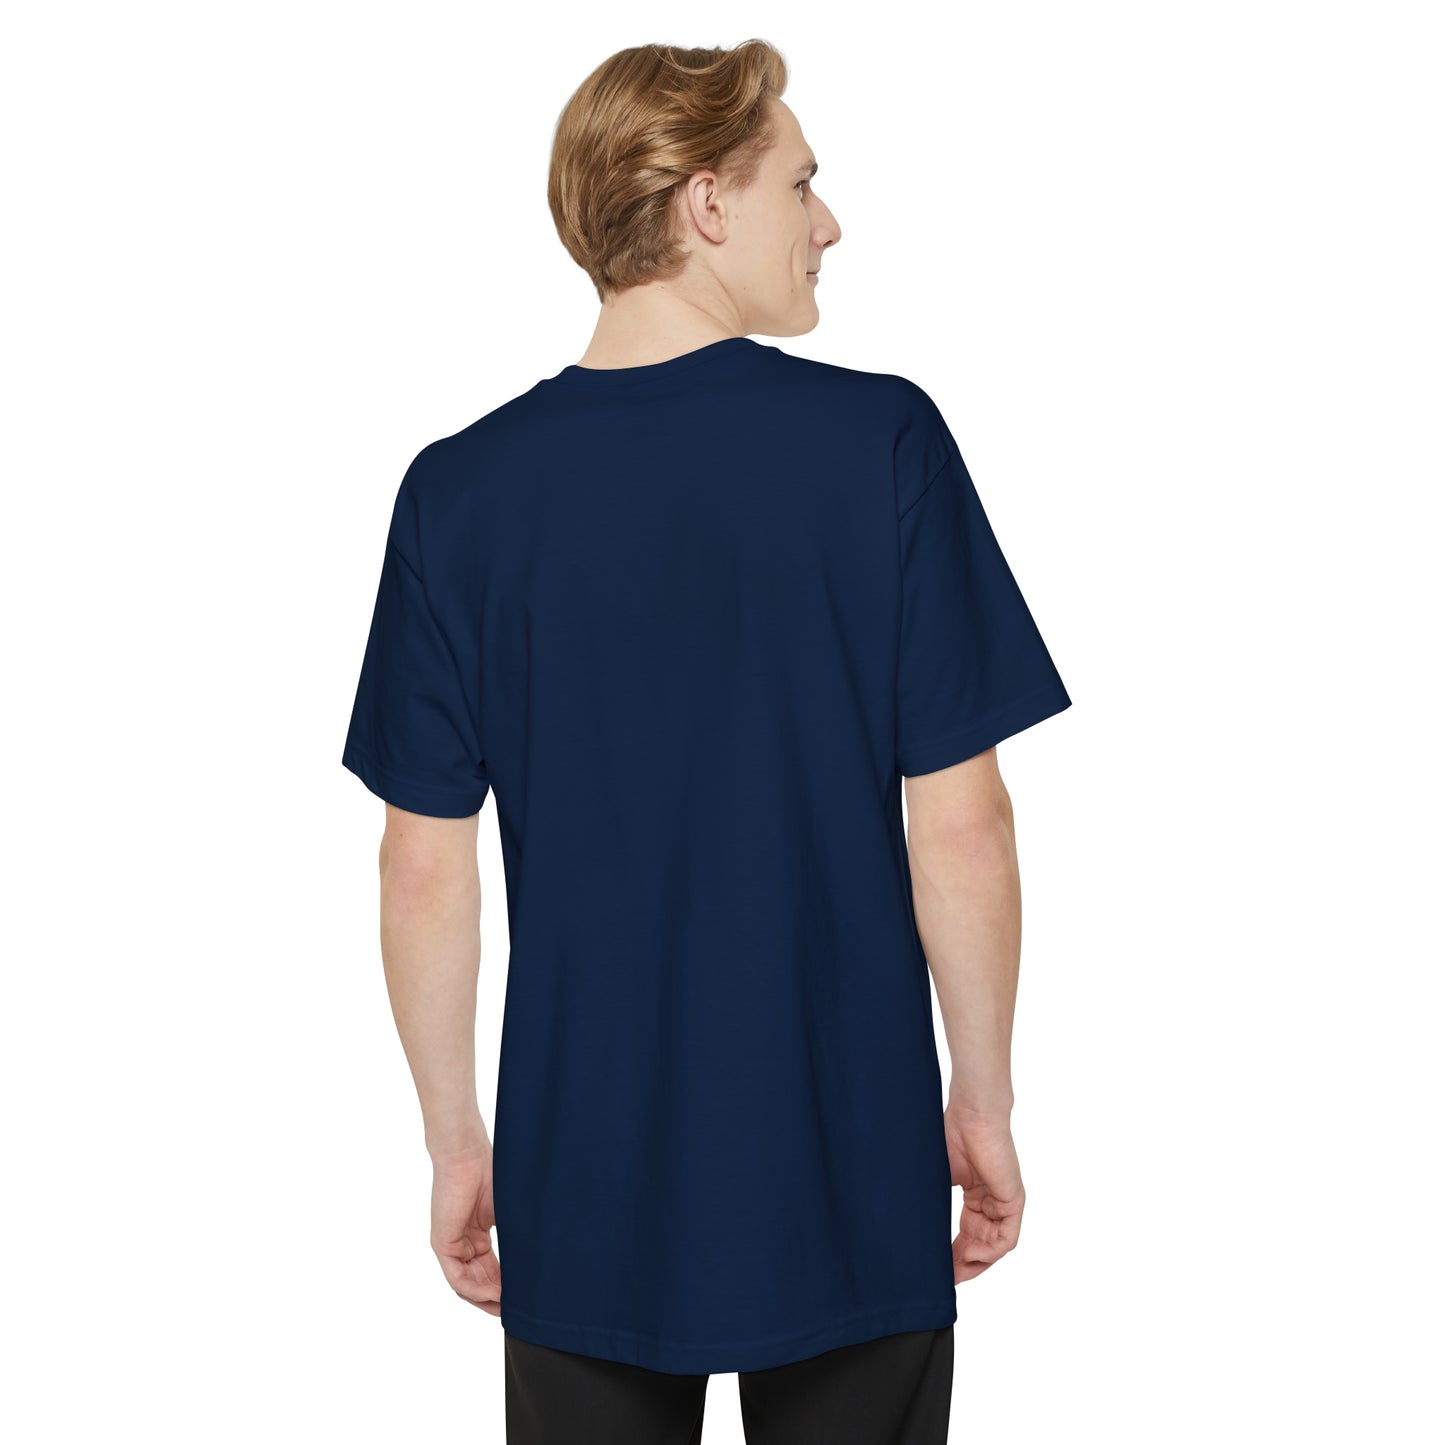 Herrington Lake Cabin Sketch Tall Hanes Beefy-T® T-Shirt